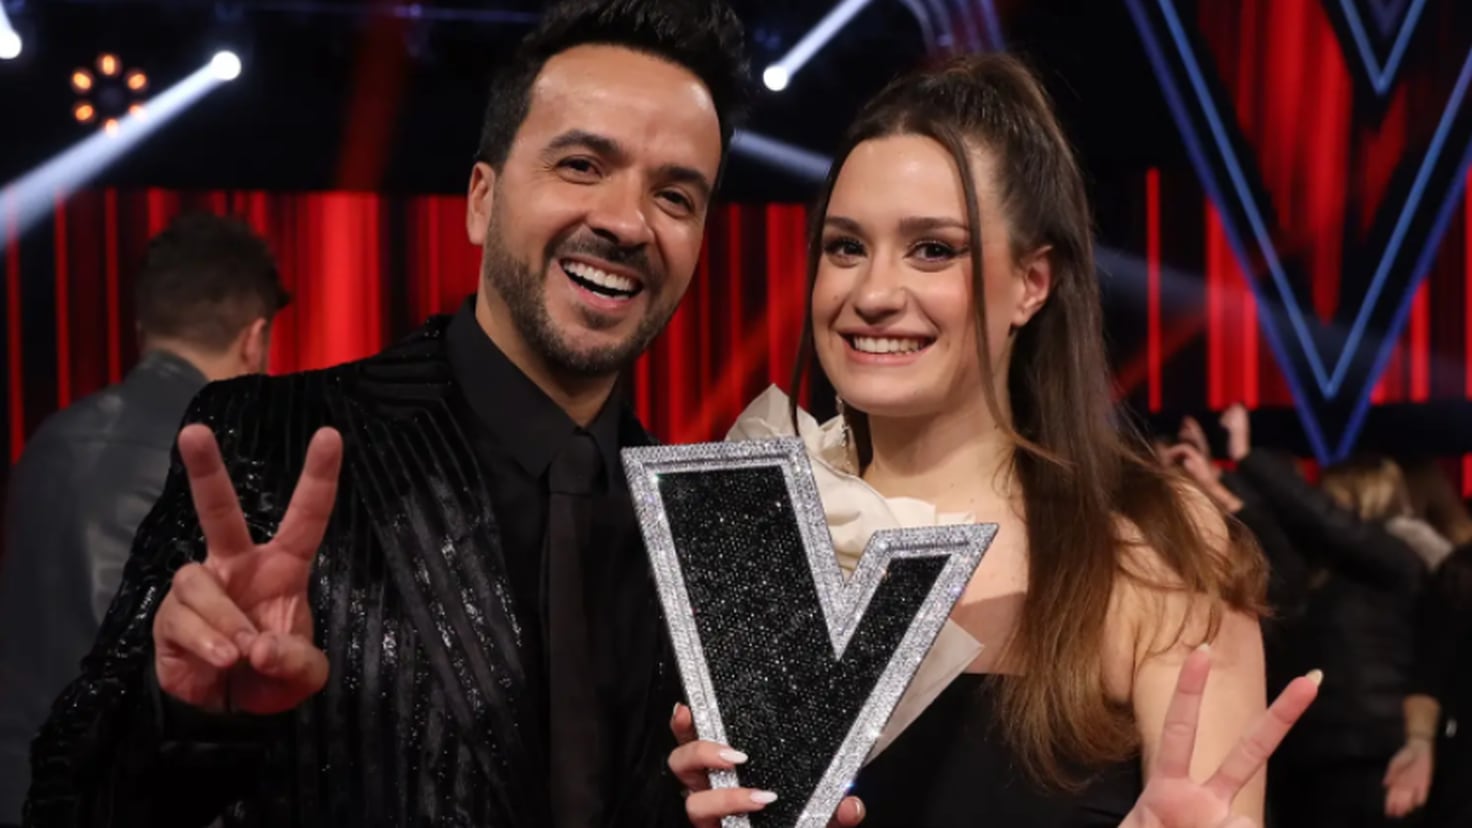 Elsa Tortonda: from participating in La Voz Kids and Got Talent, to winning La Voz with Luis Fonsi
